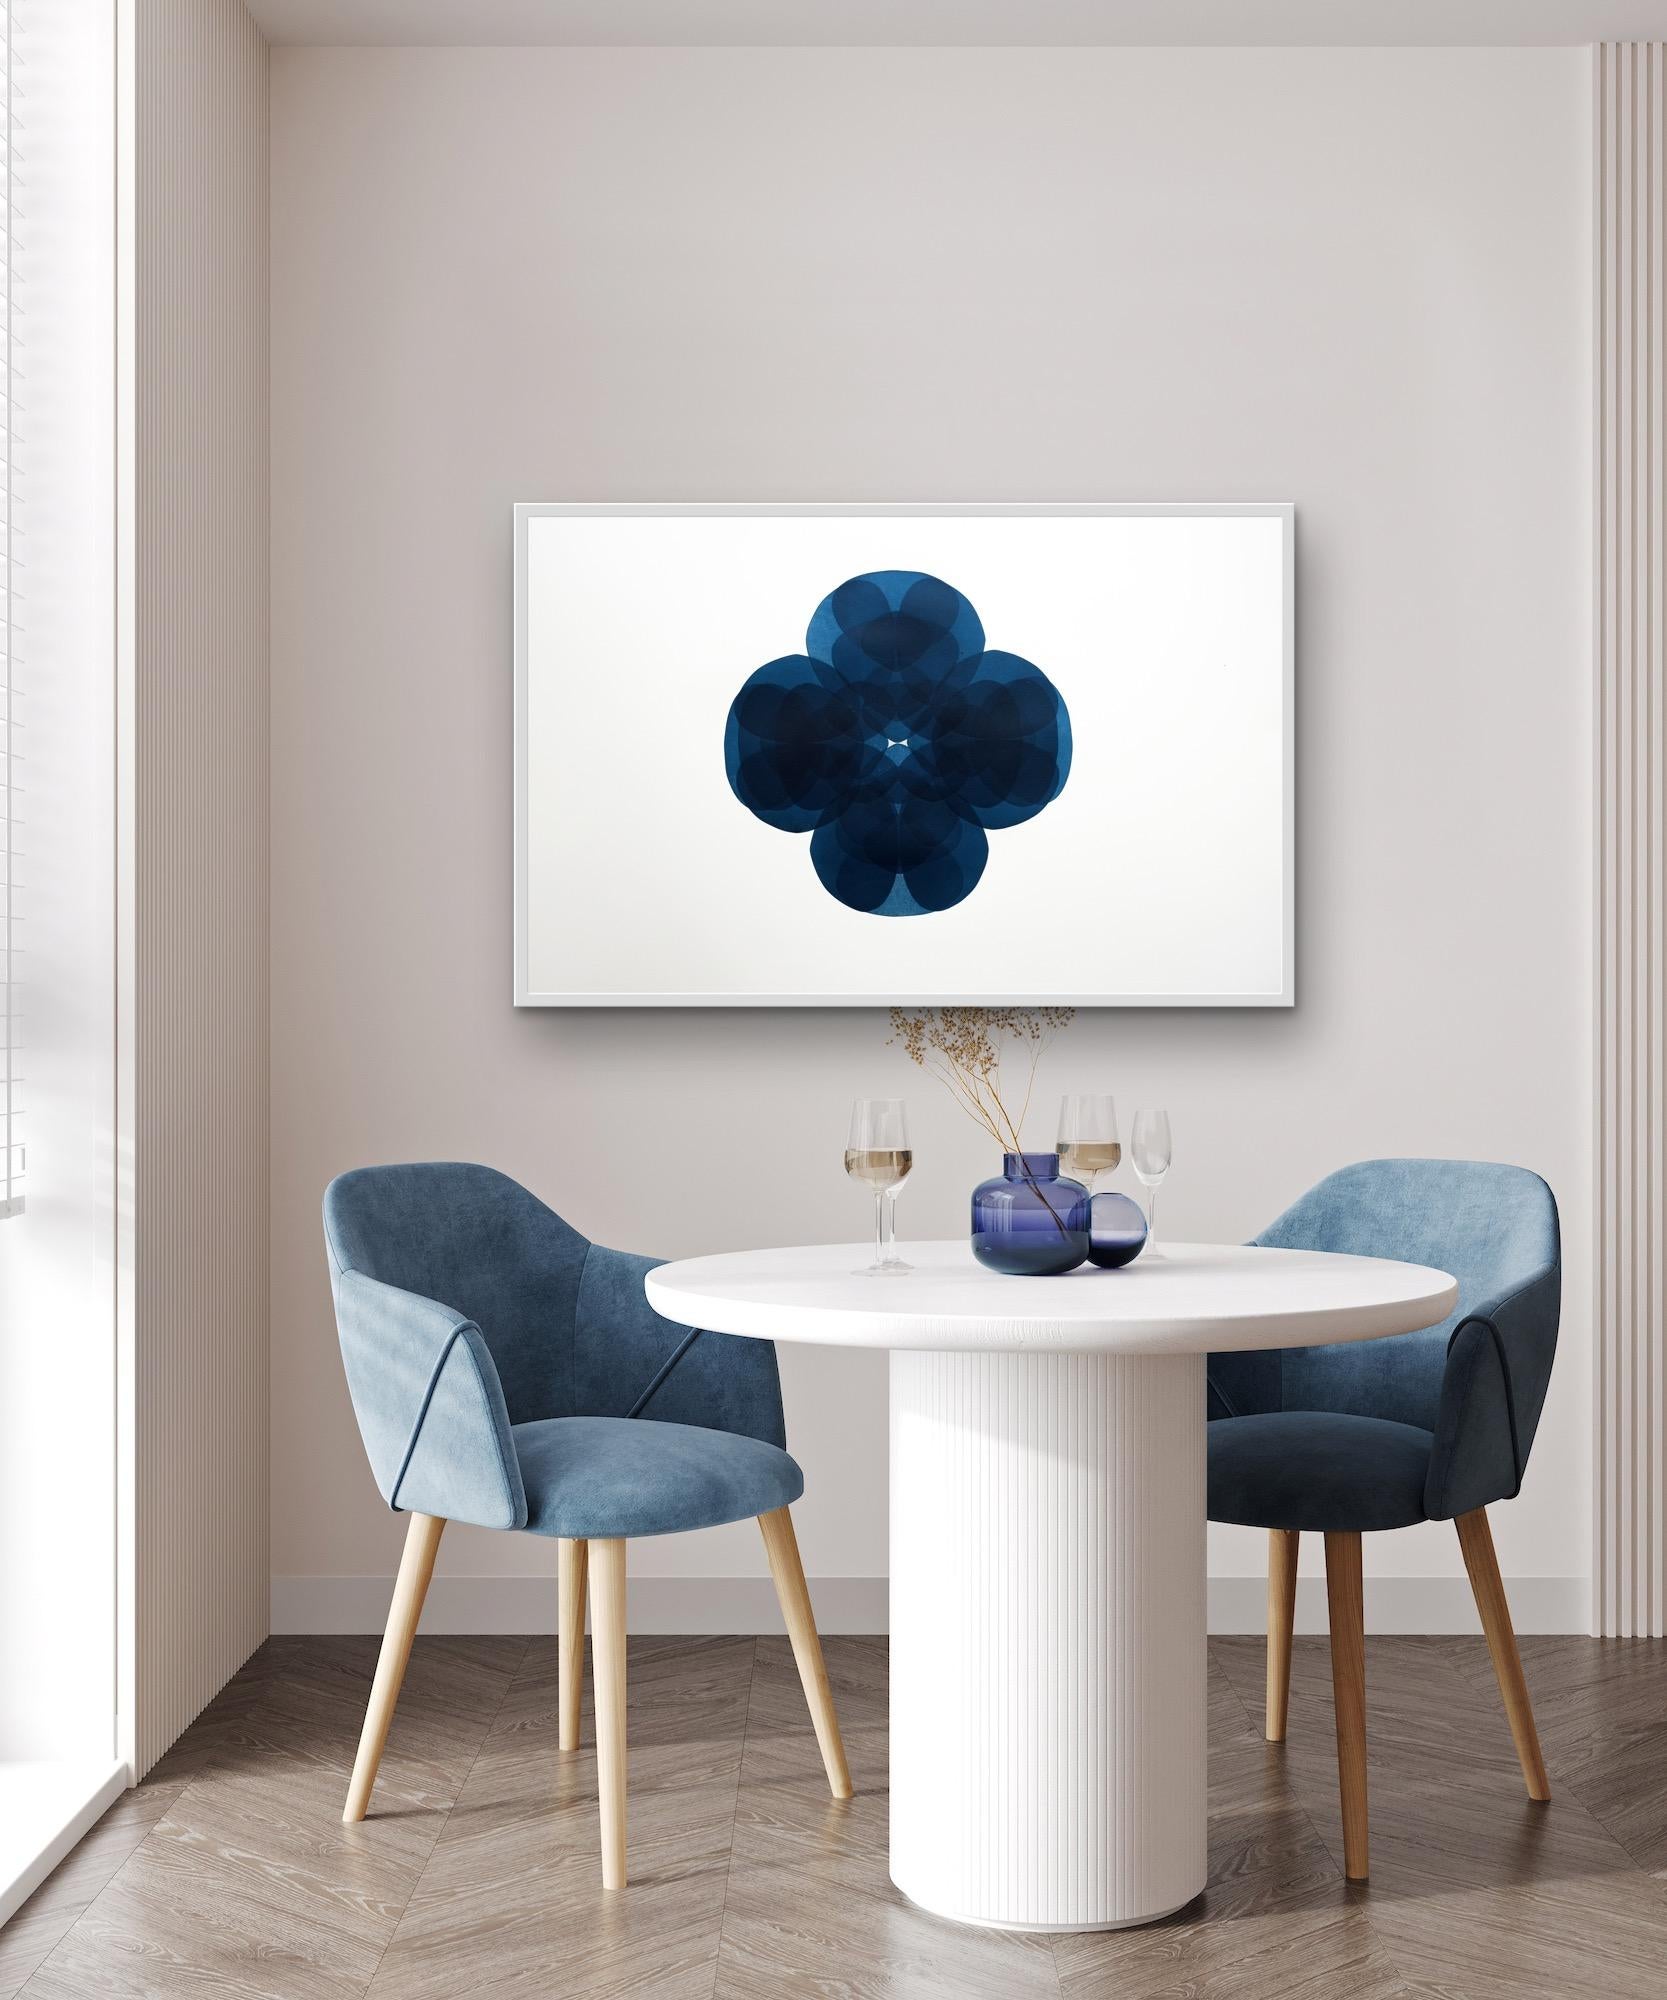 NV20, unique print, blue art, relief print, affordable art, symmetrical art - Print by Jonathan Moss